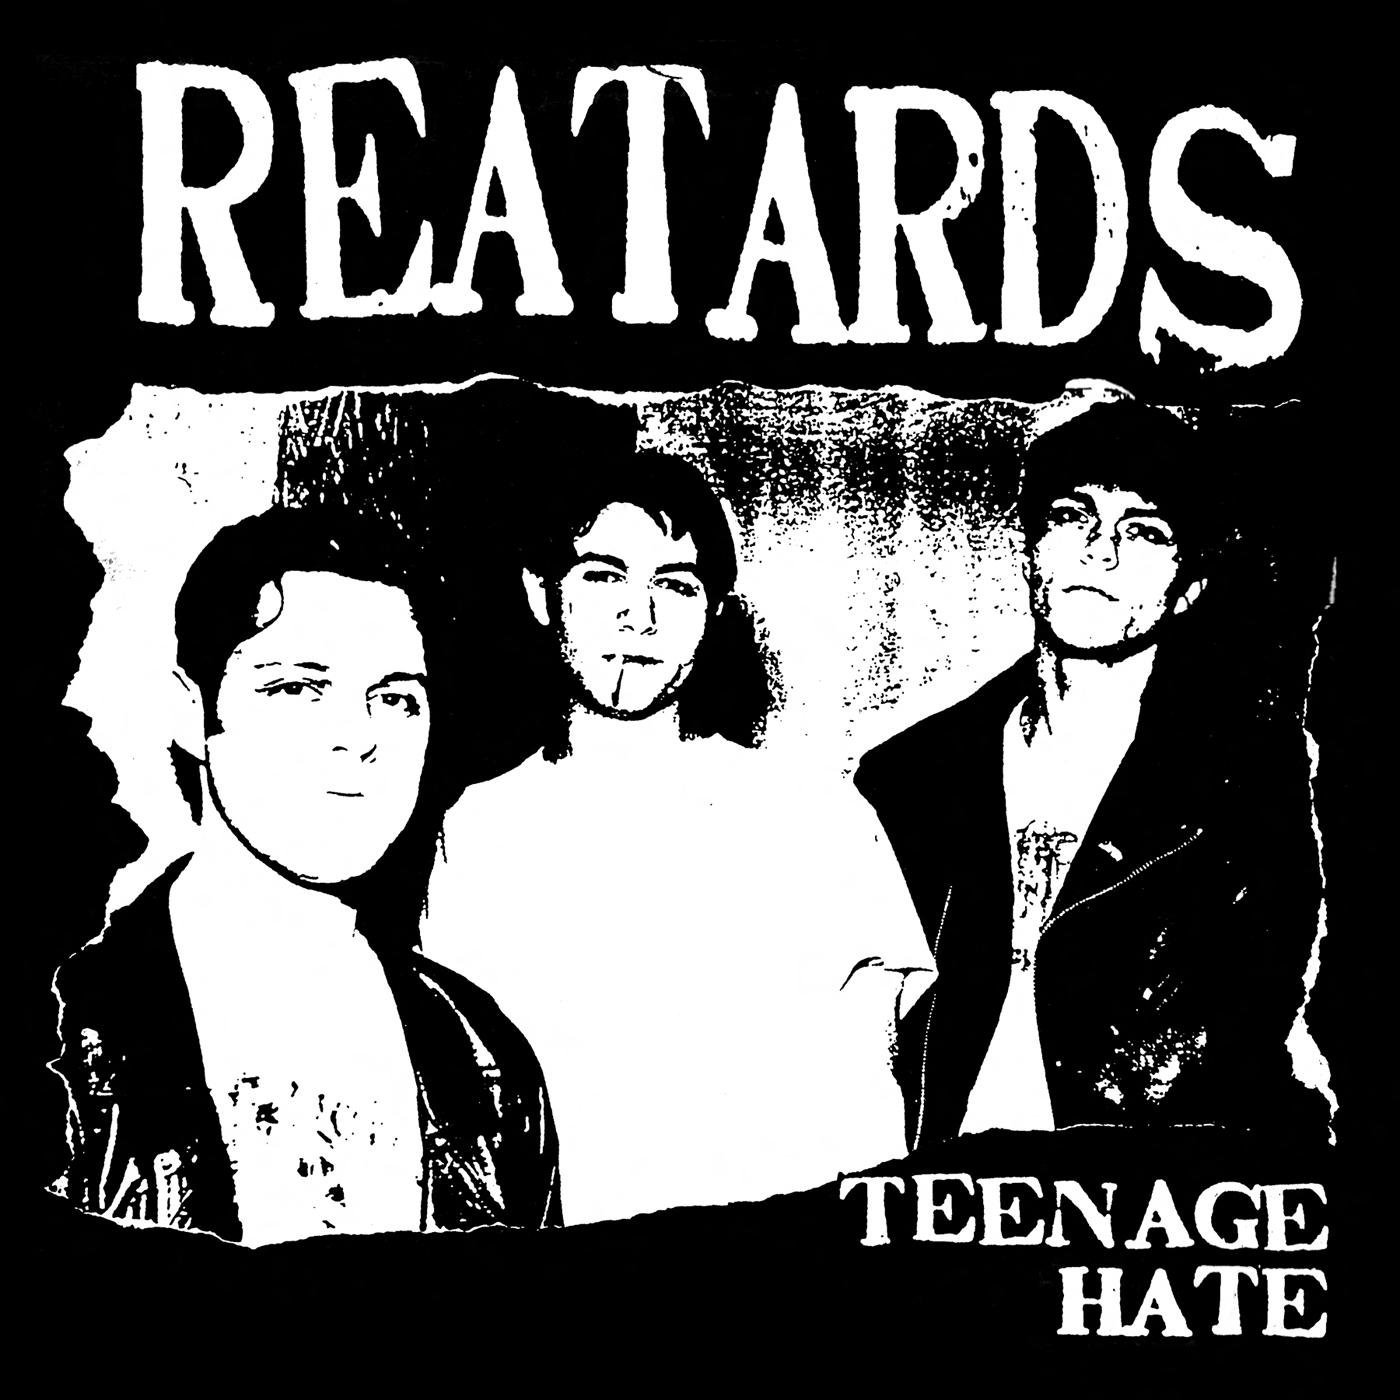 garage rock teenage hate